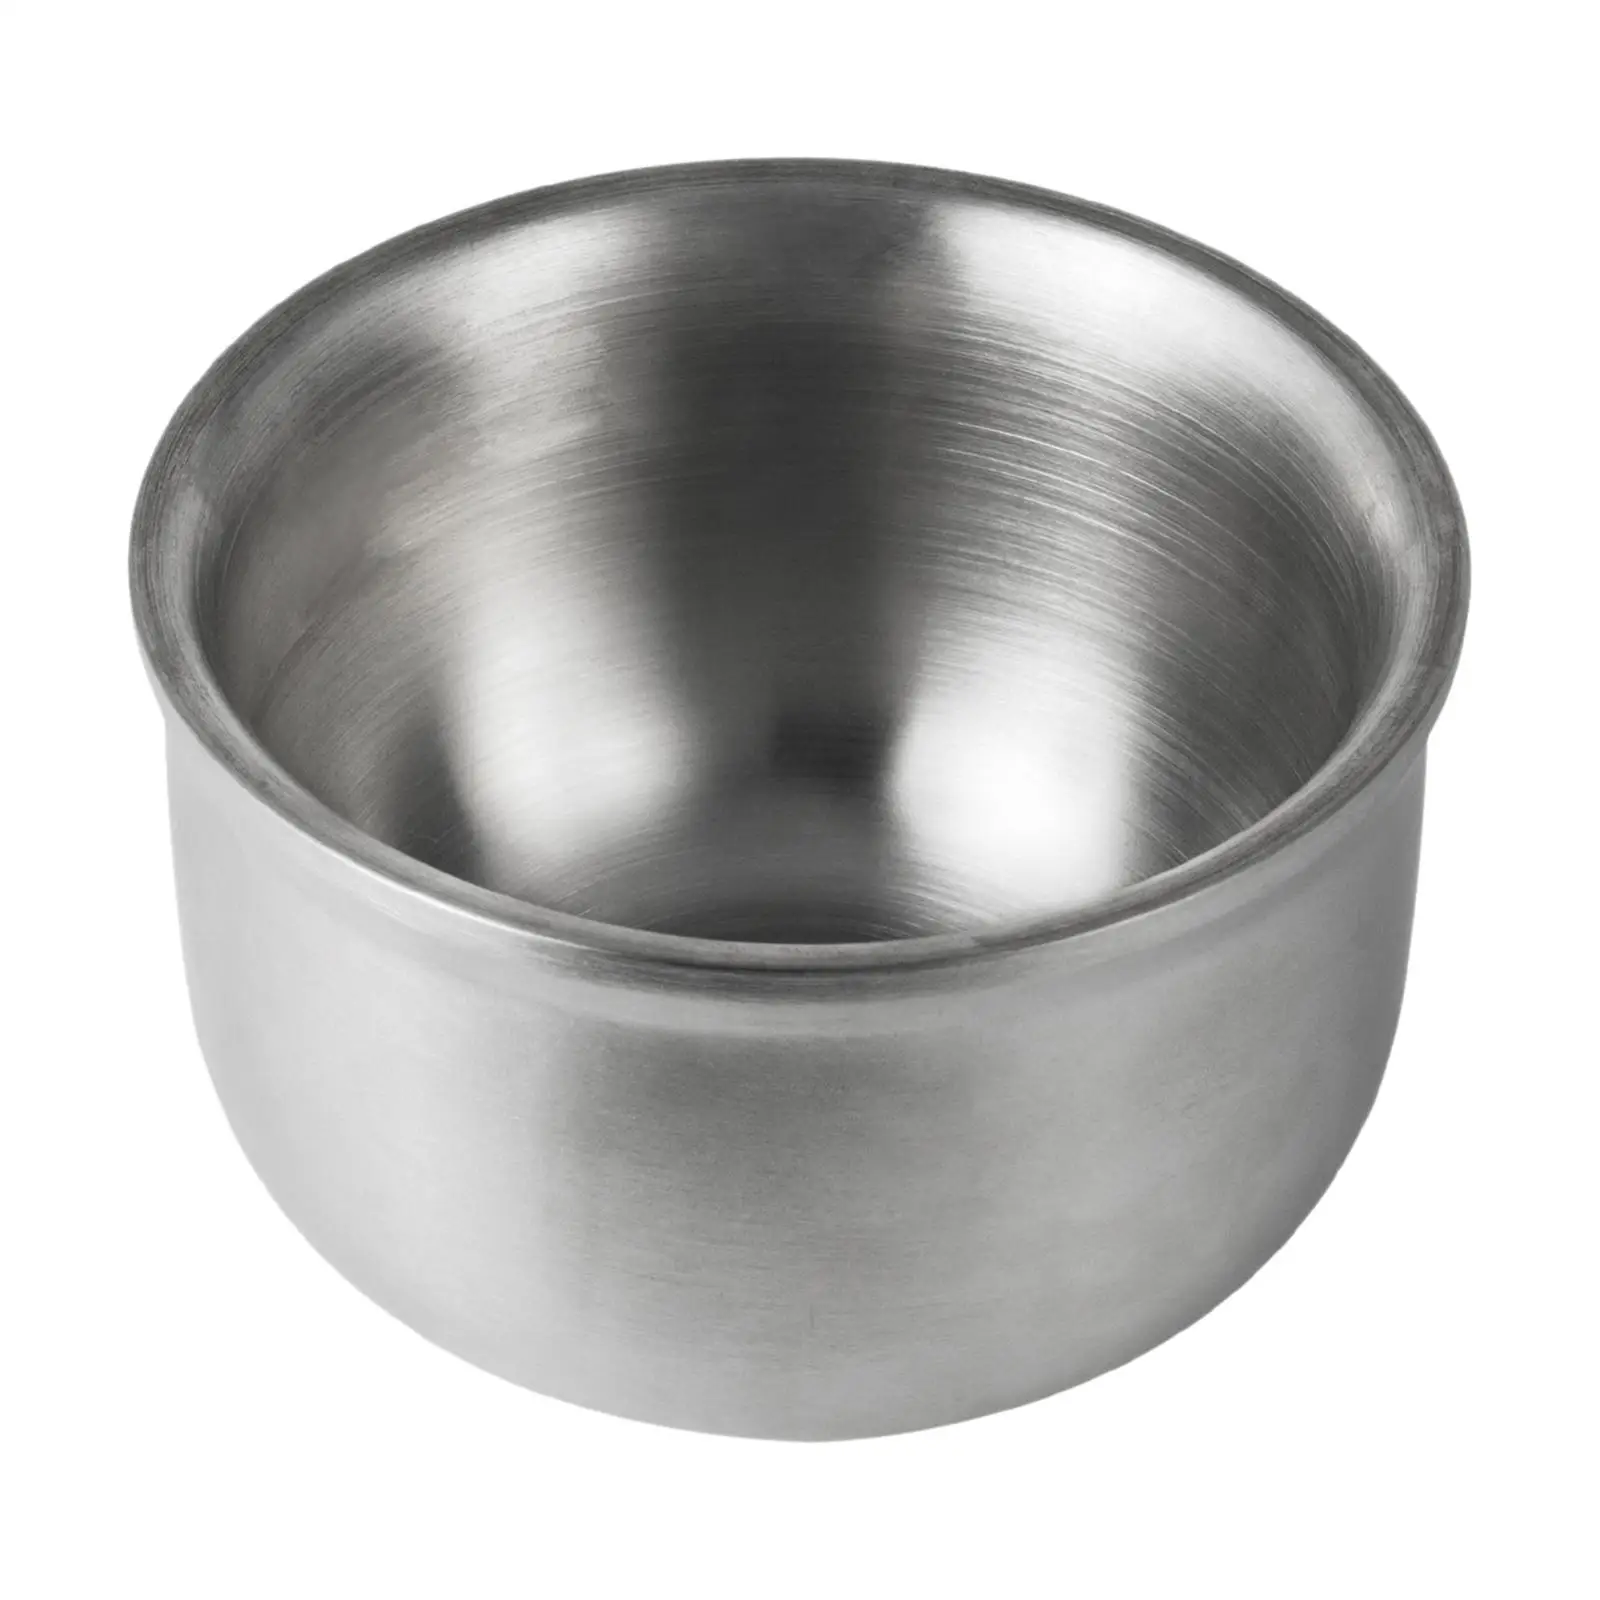 Shaving Bowl Fits Wet Shaving Small Stainless Steel Portable Heat Insulation Durable Shaving Mug Shave Soap Cup for Men Gift